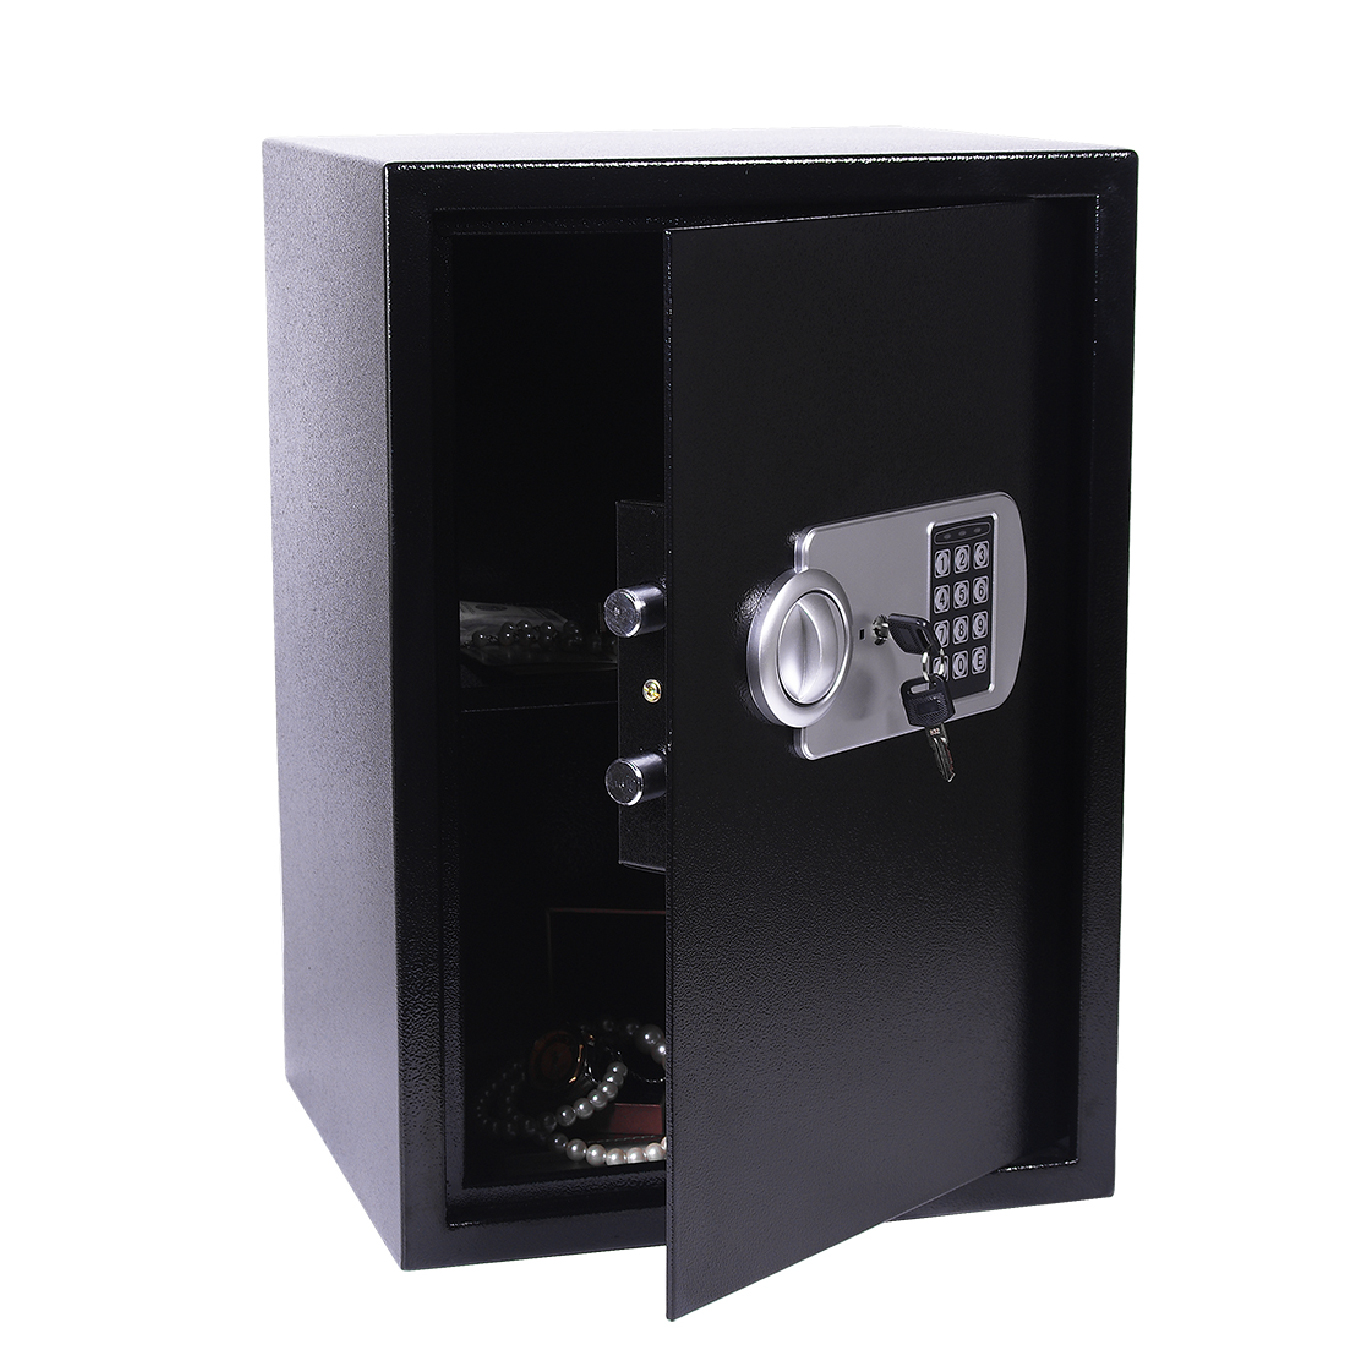 Lock Well Electronic Safe, Digital Lock With 3 Led Indicators, Blackcolors, 50EL